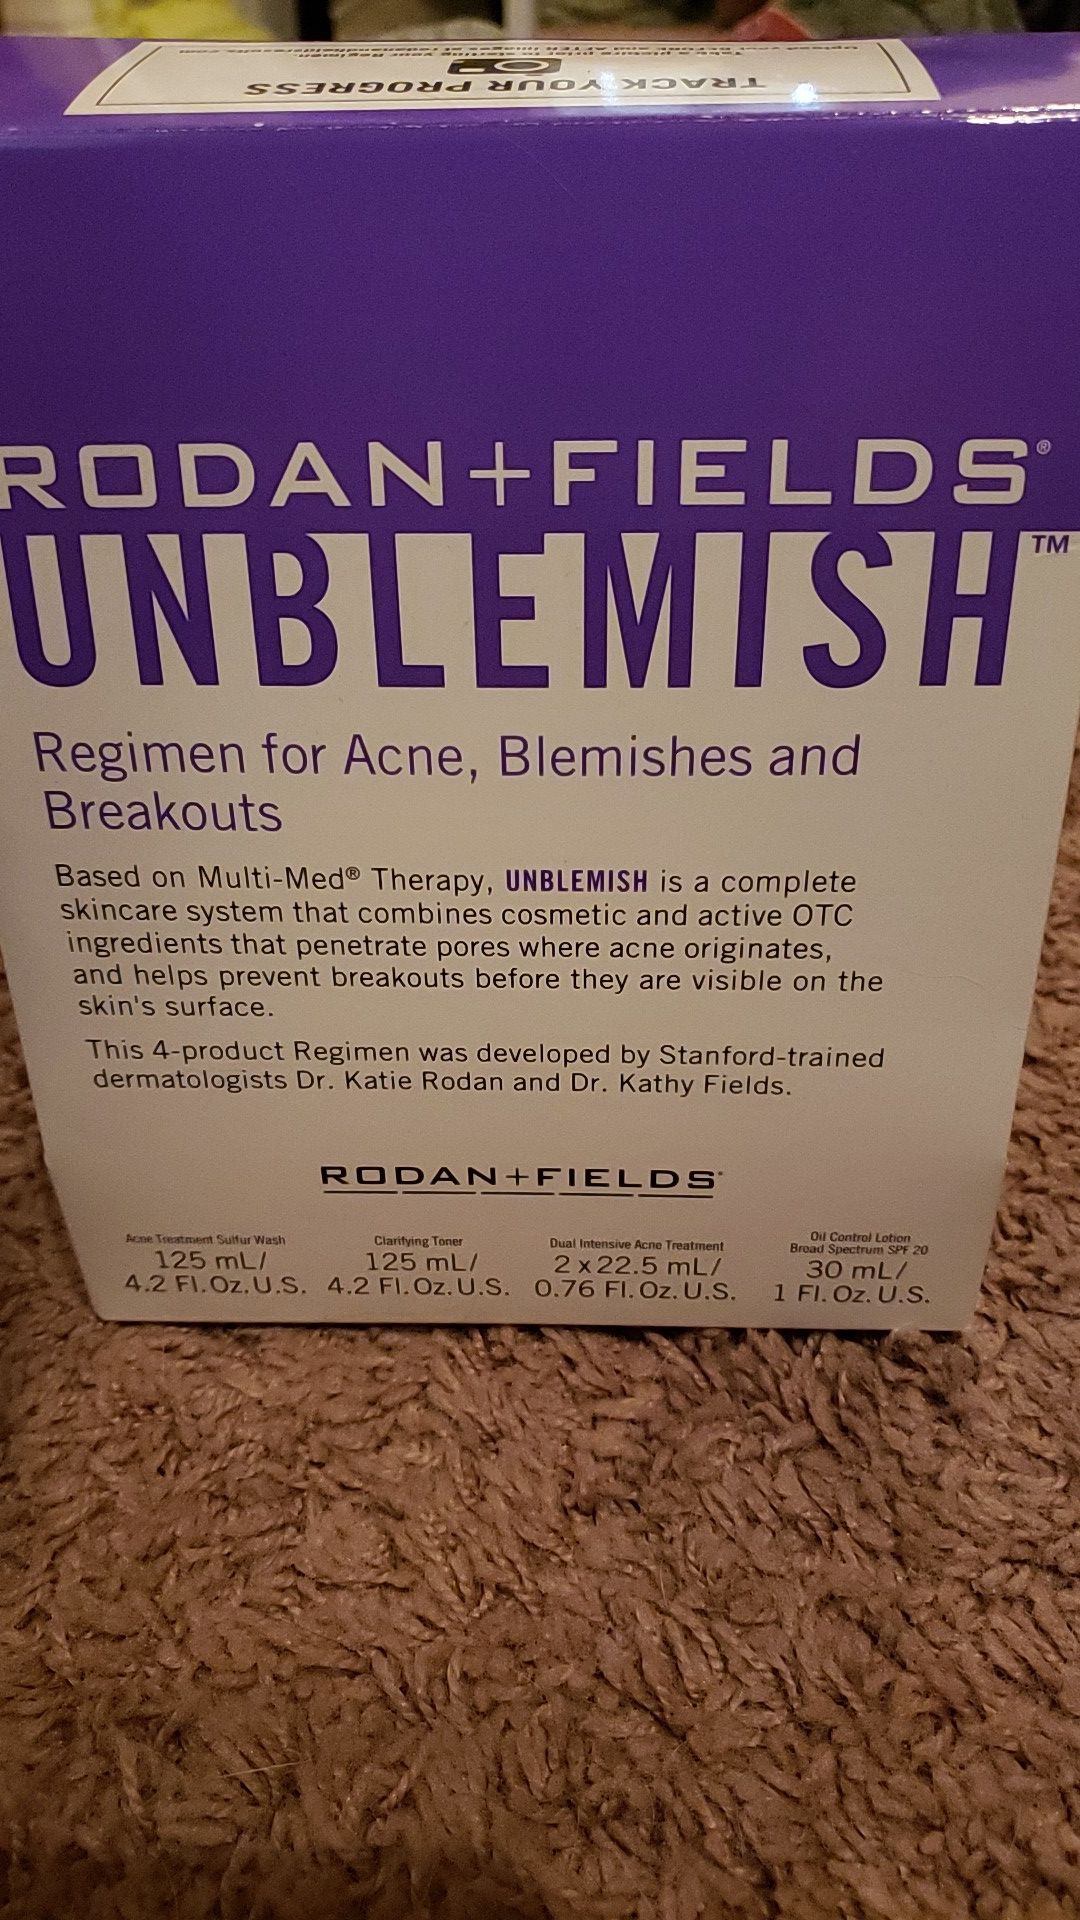 Rodan+Fields Unblemished skin care